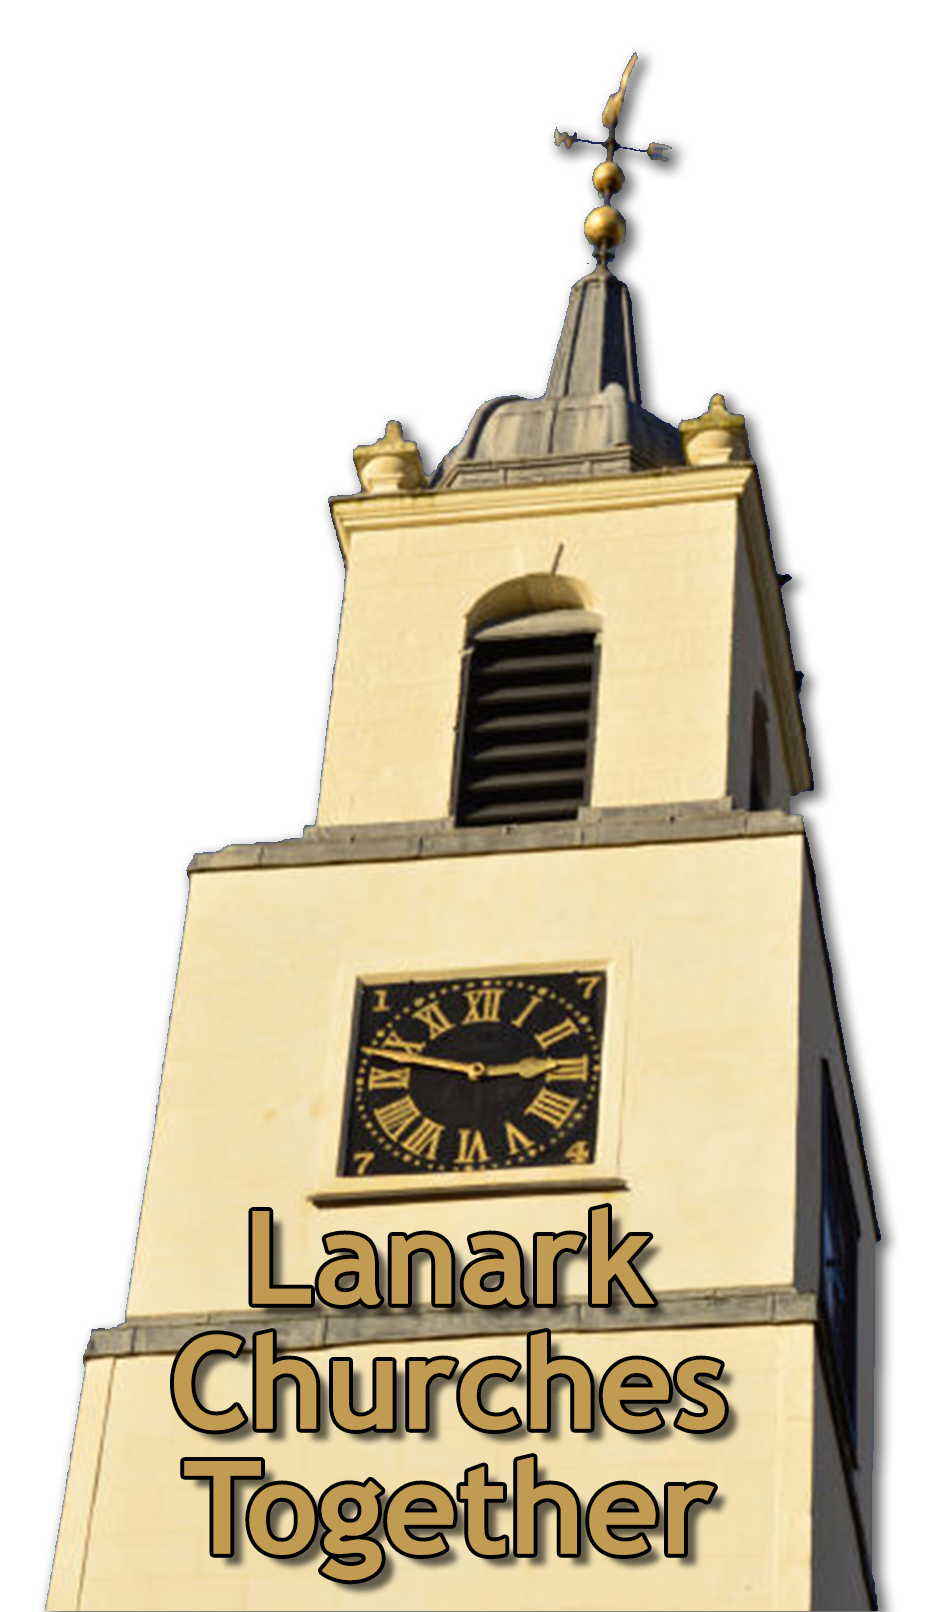 The Churches in Lanark